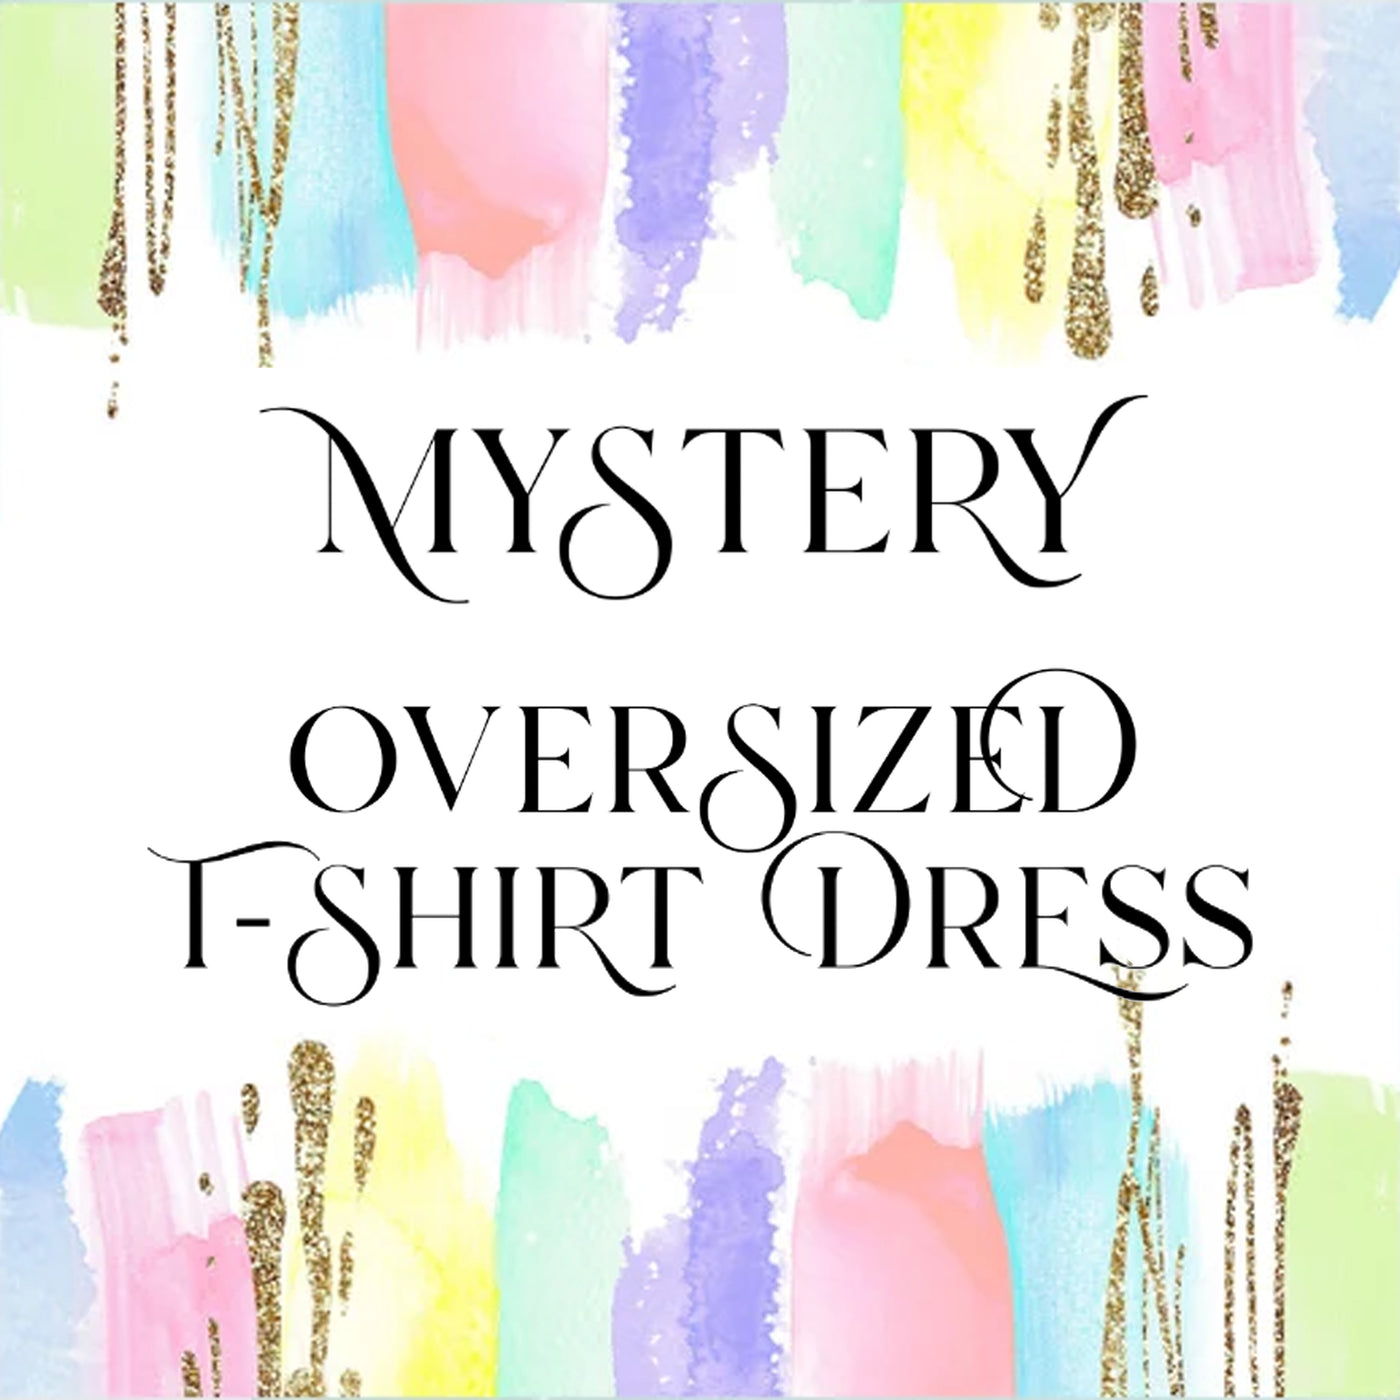 3 Mystery Oversized T-Shirt Dresses